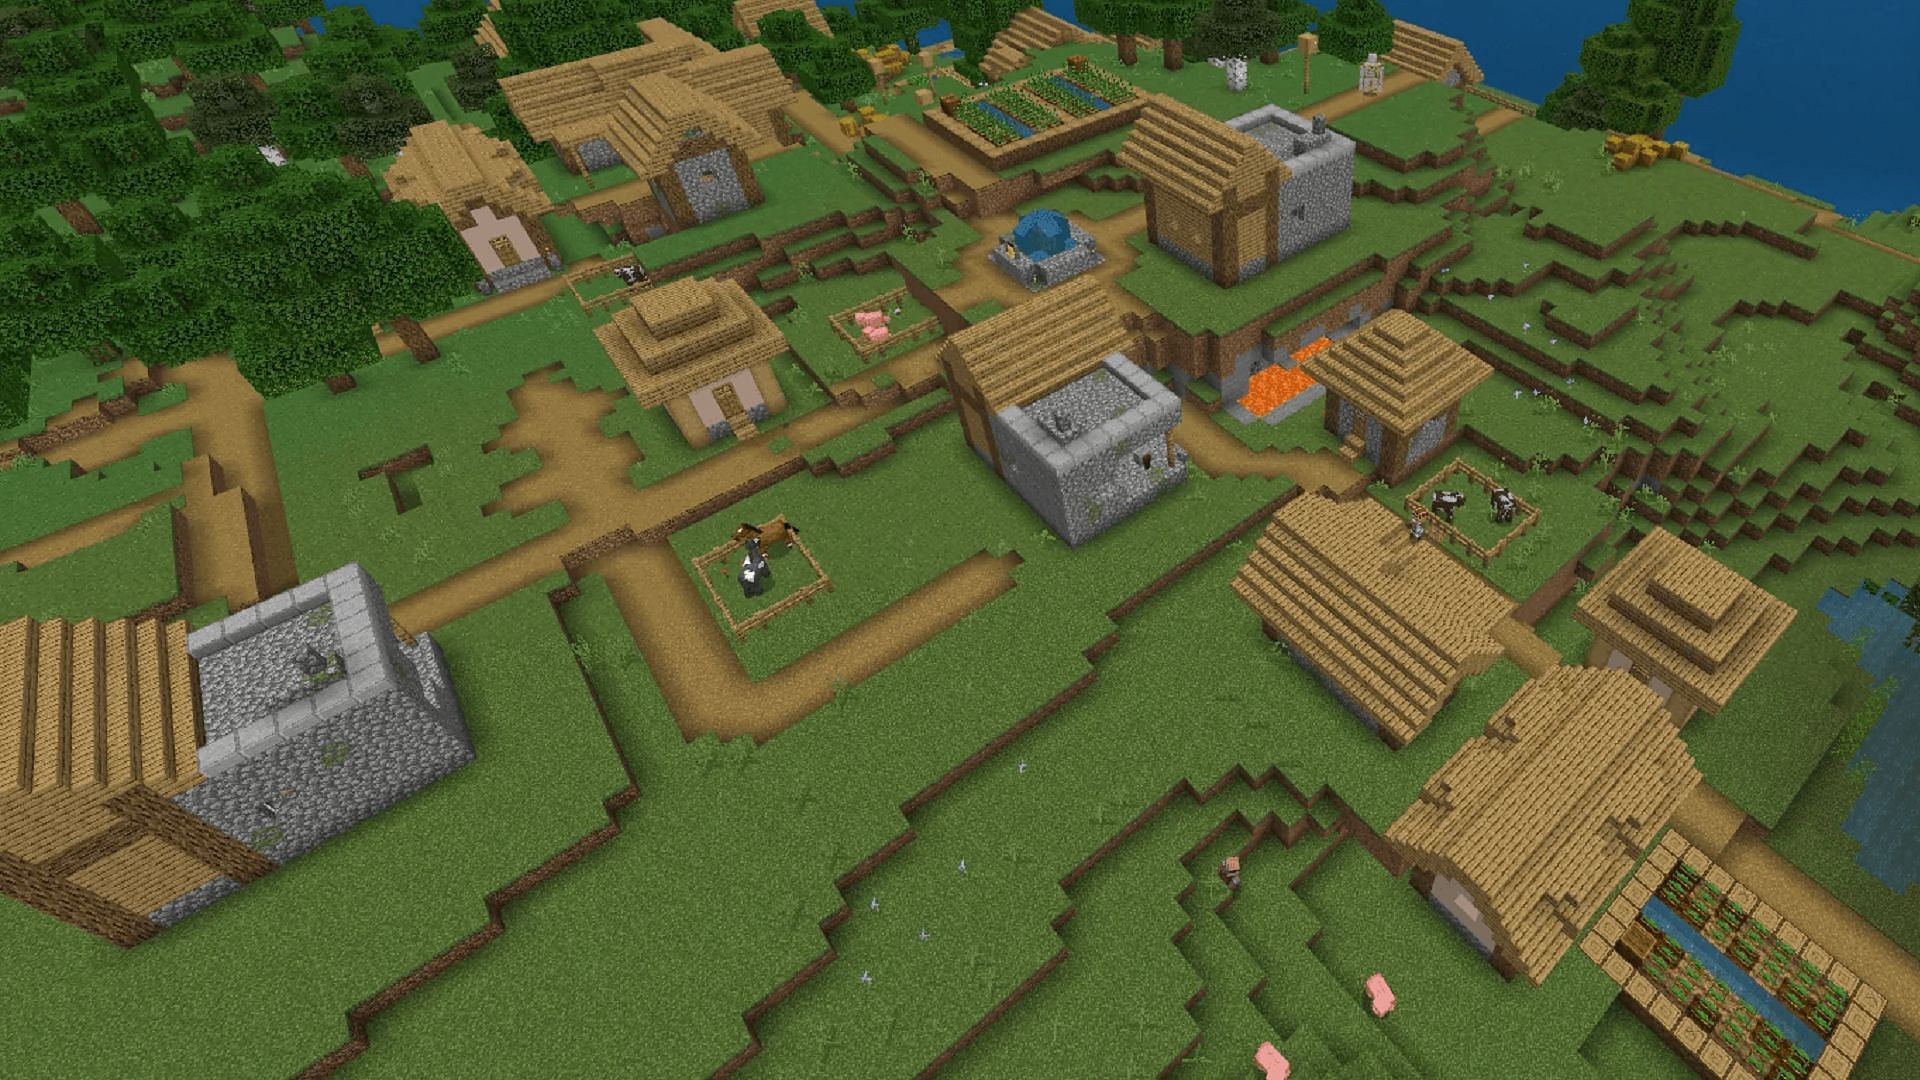 A Minecraft village containing multiple blacksmith shops.